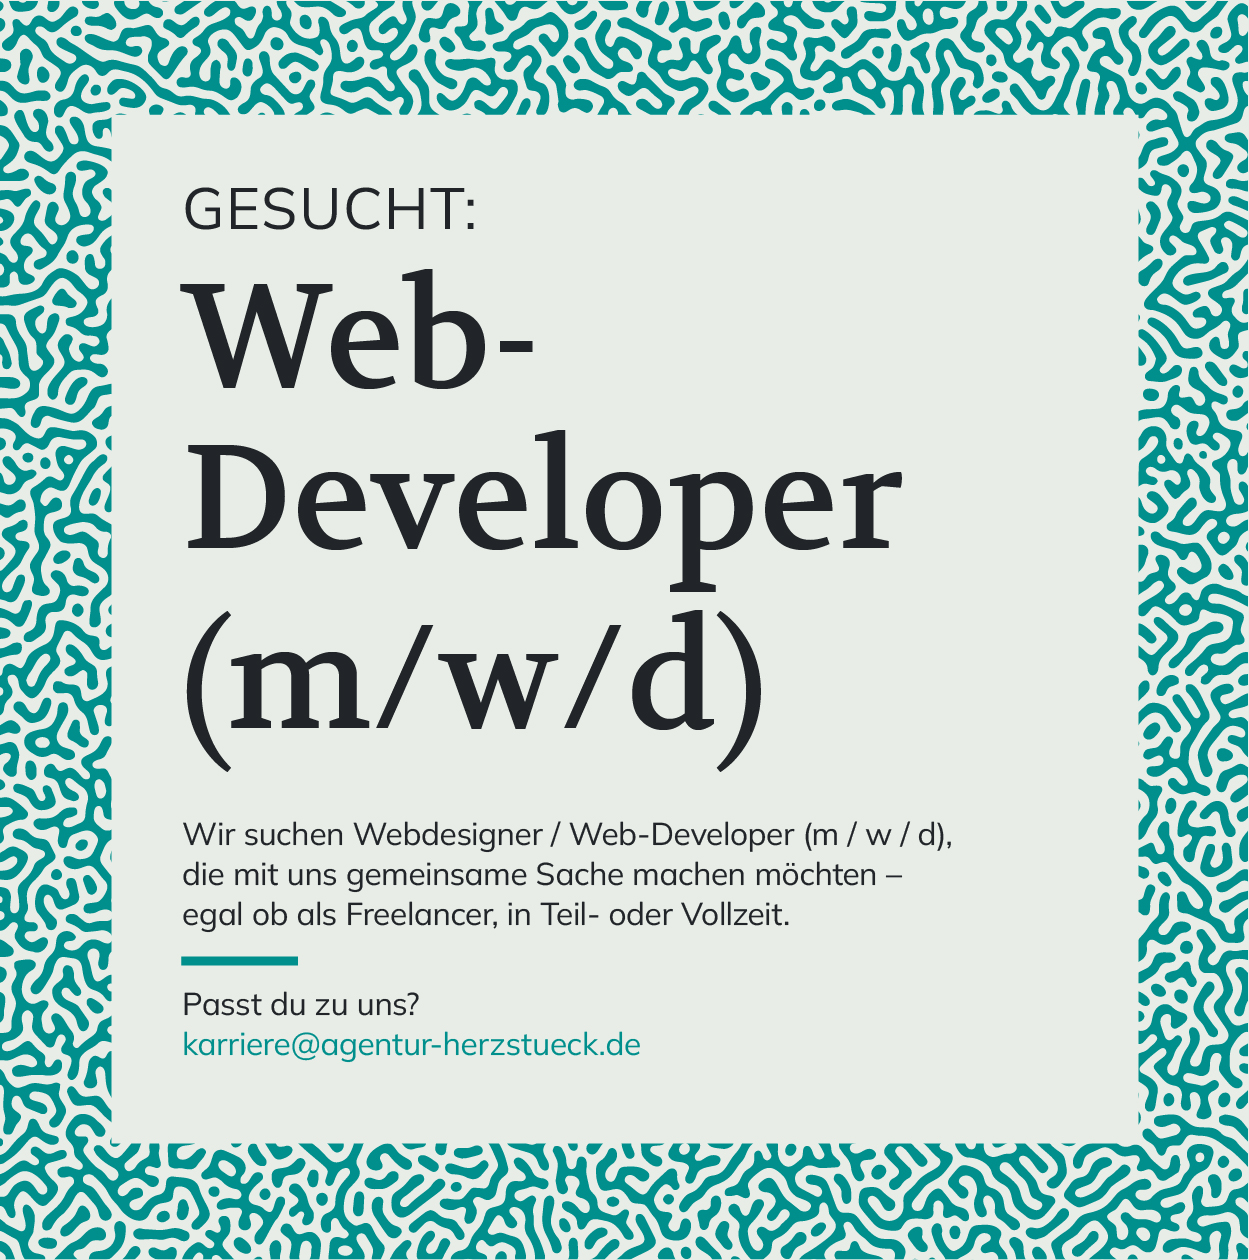 Web-Developer (m/w/d) gesucht!